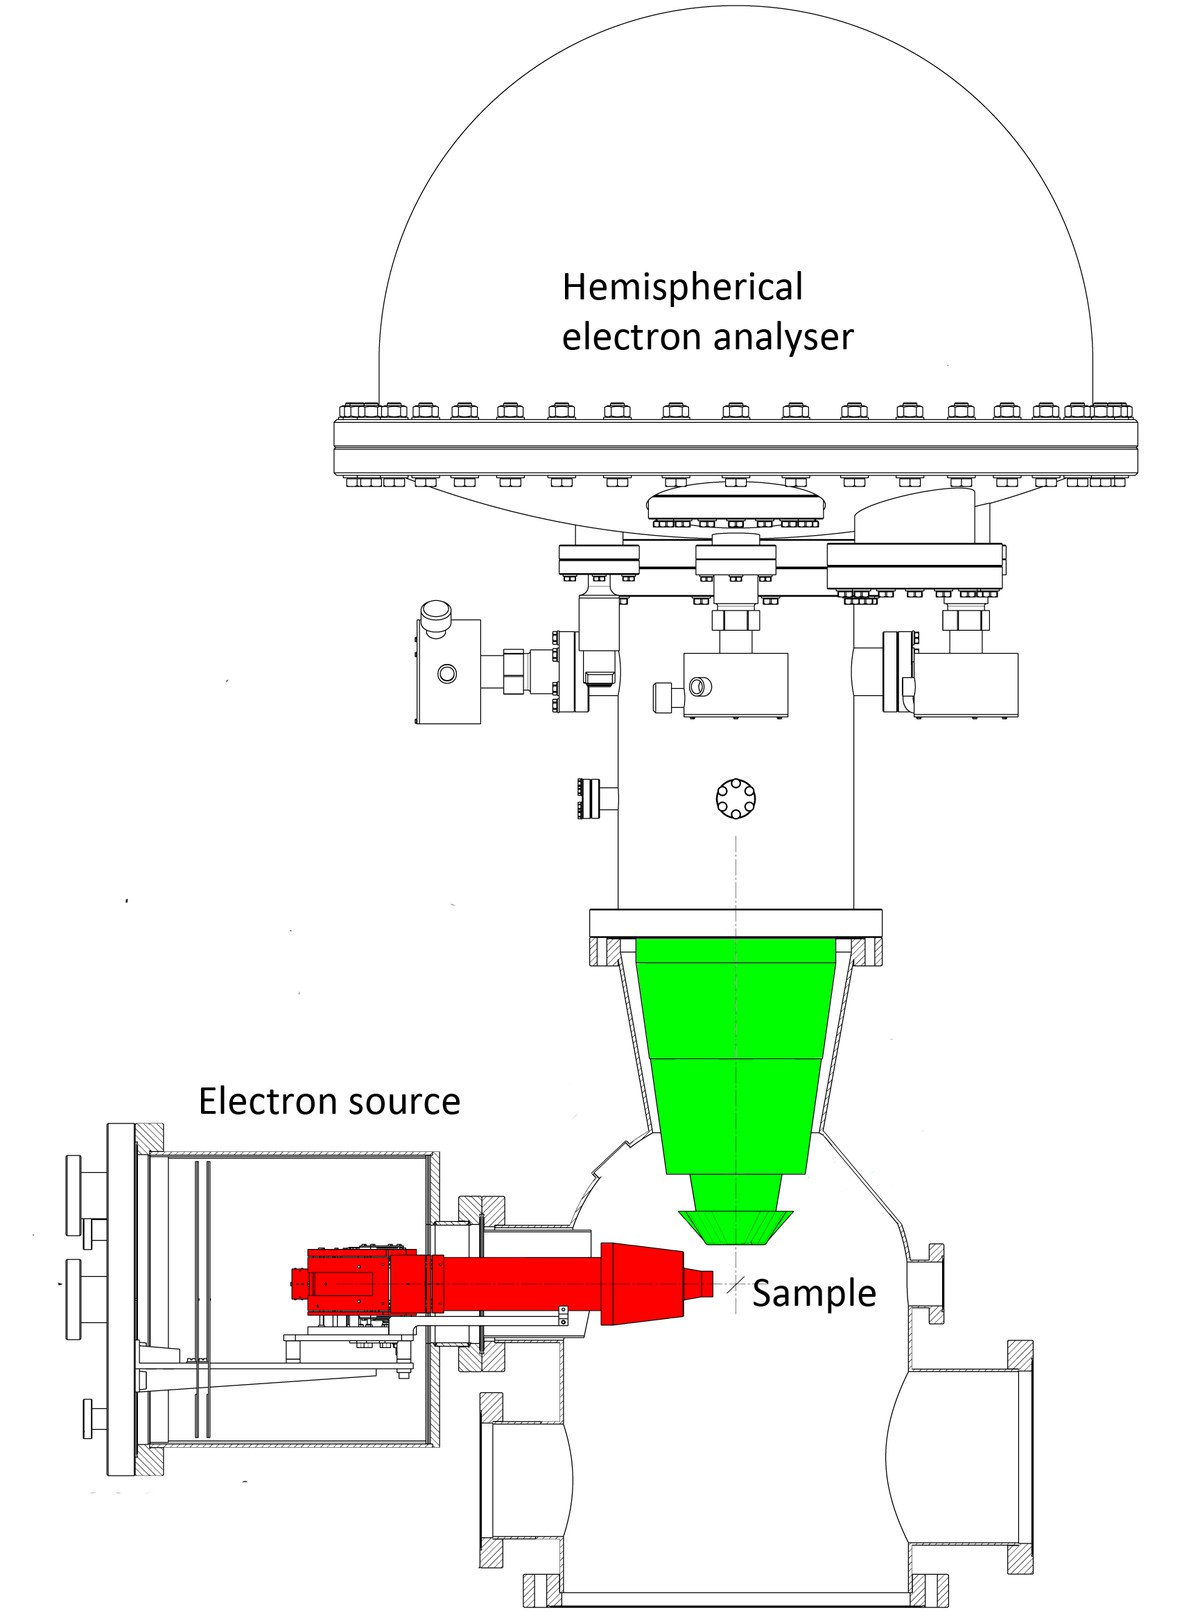 HREELS sample chamber